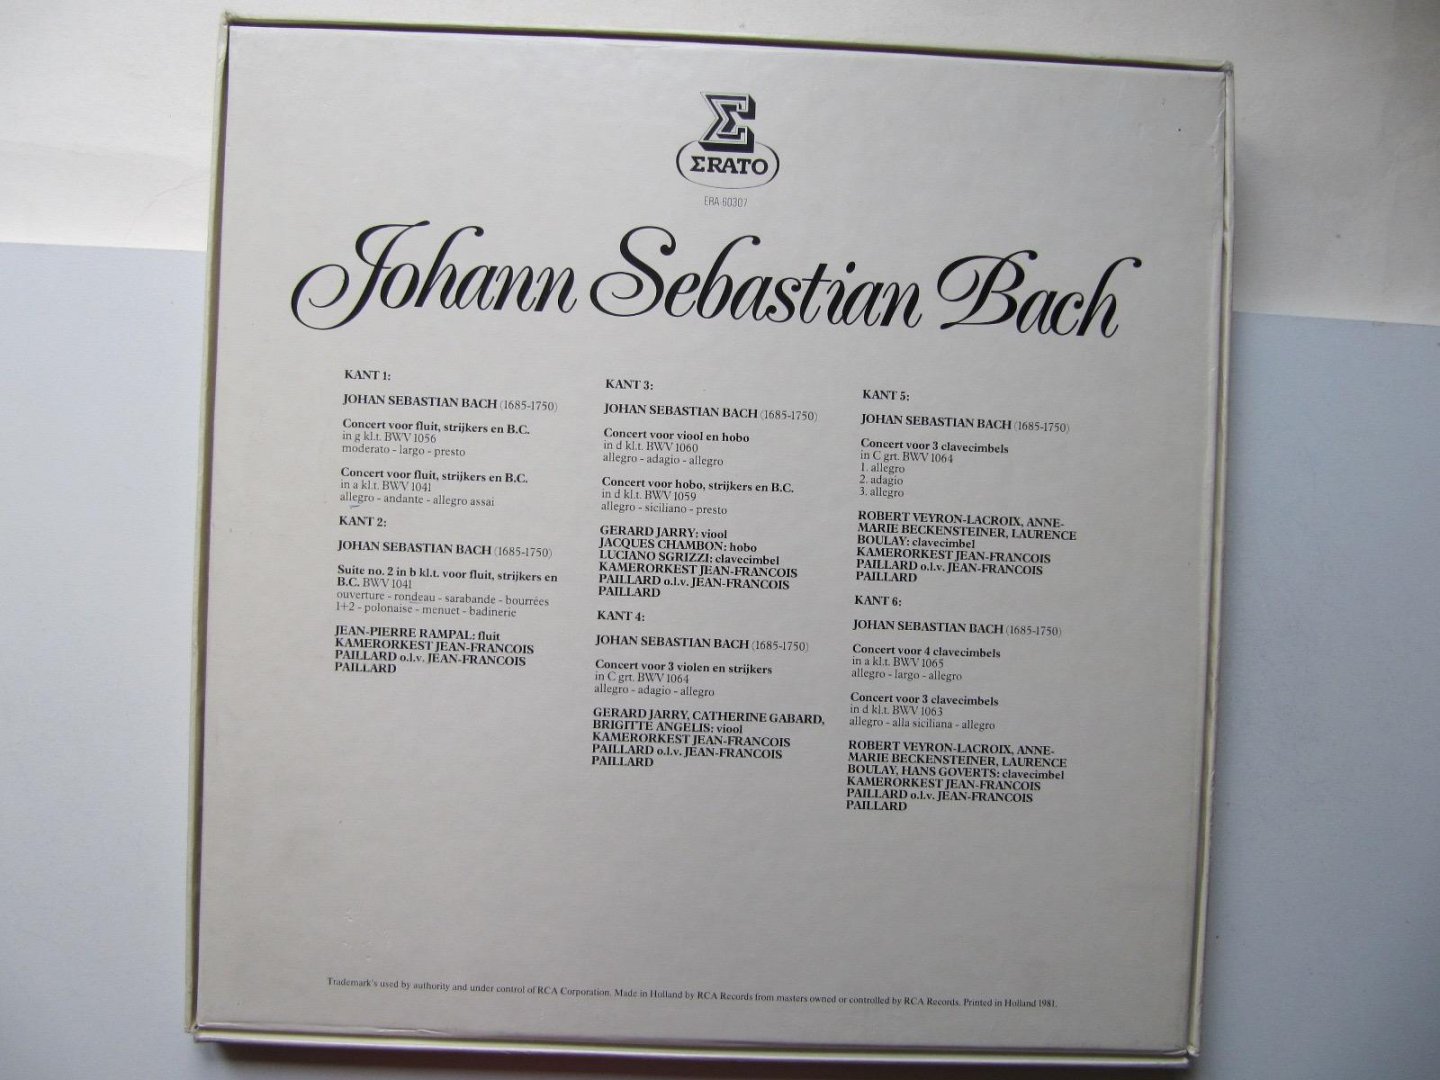 J.S. Bach - 3LP Johann Sebastian Bach